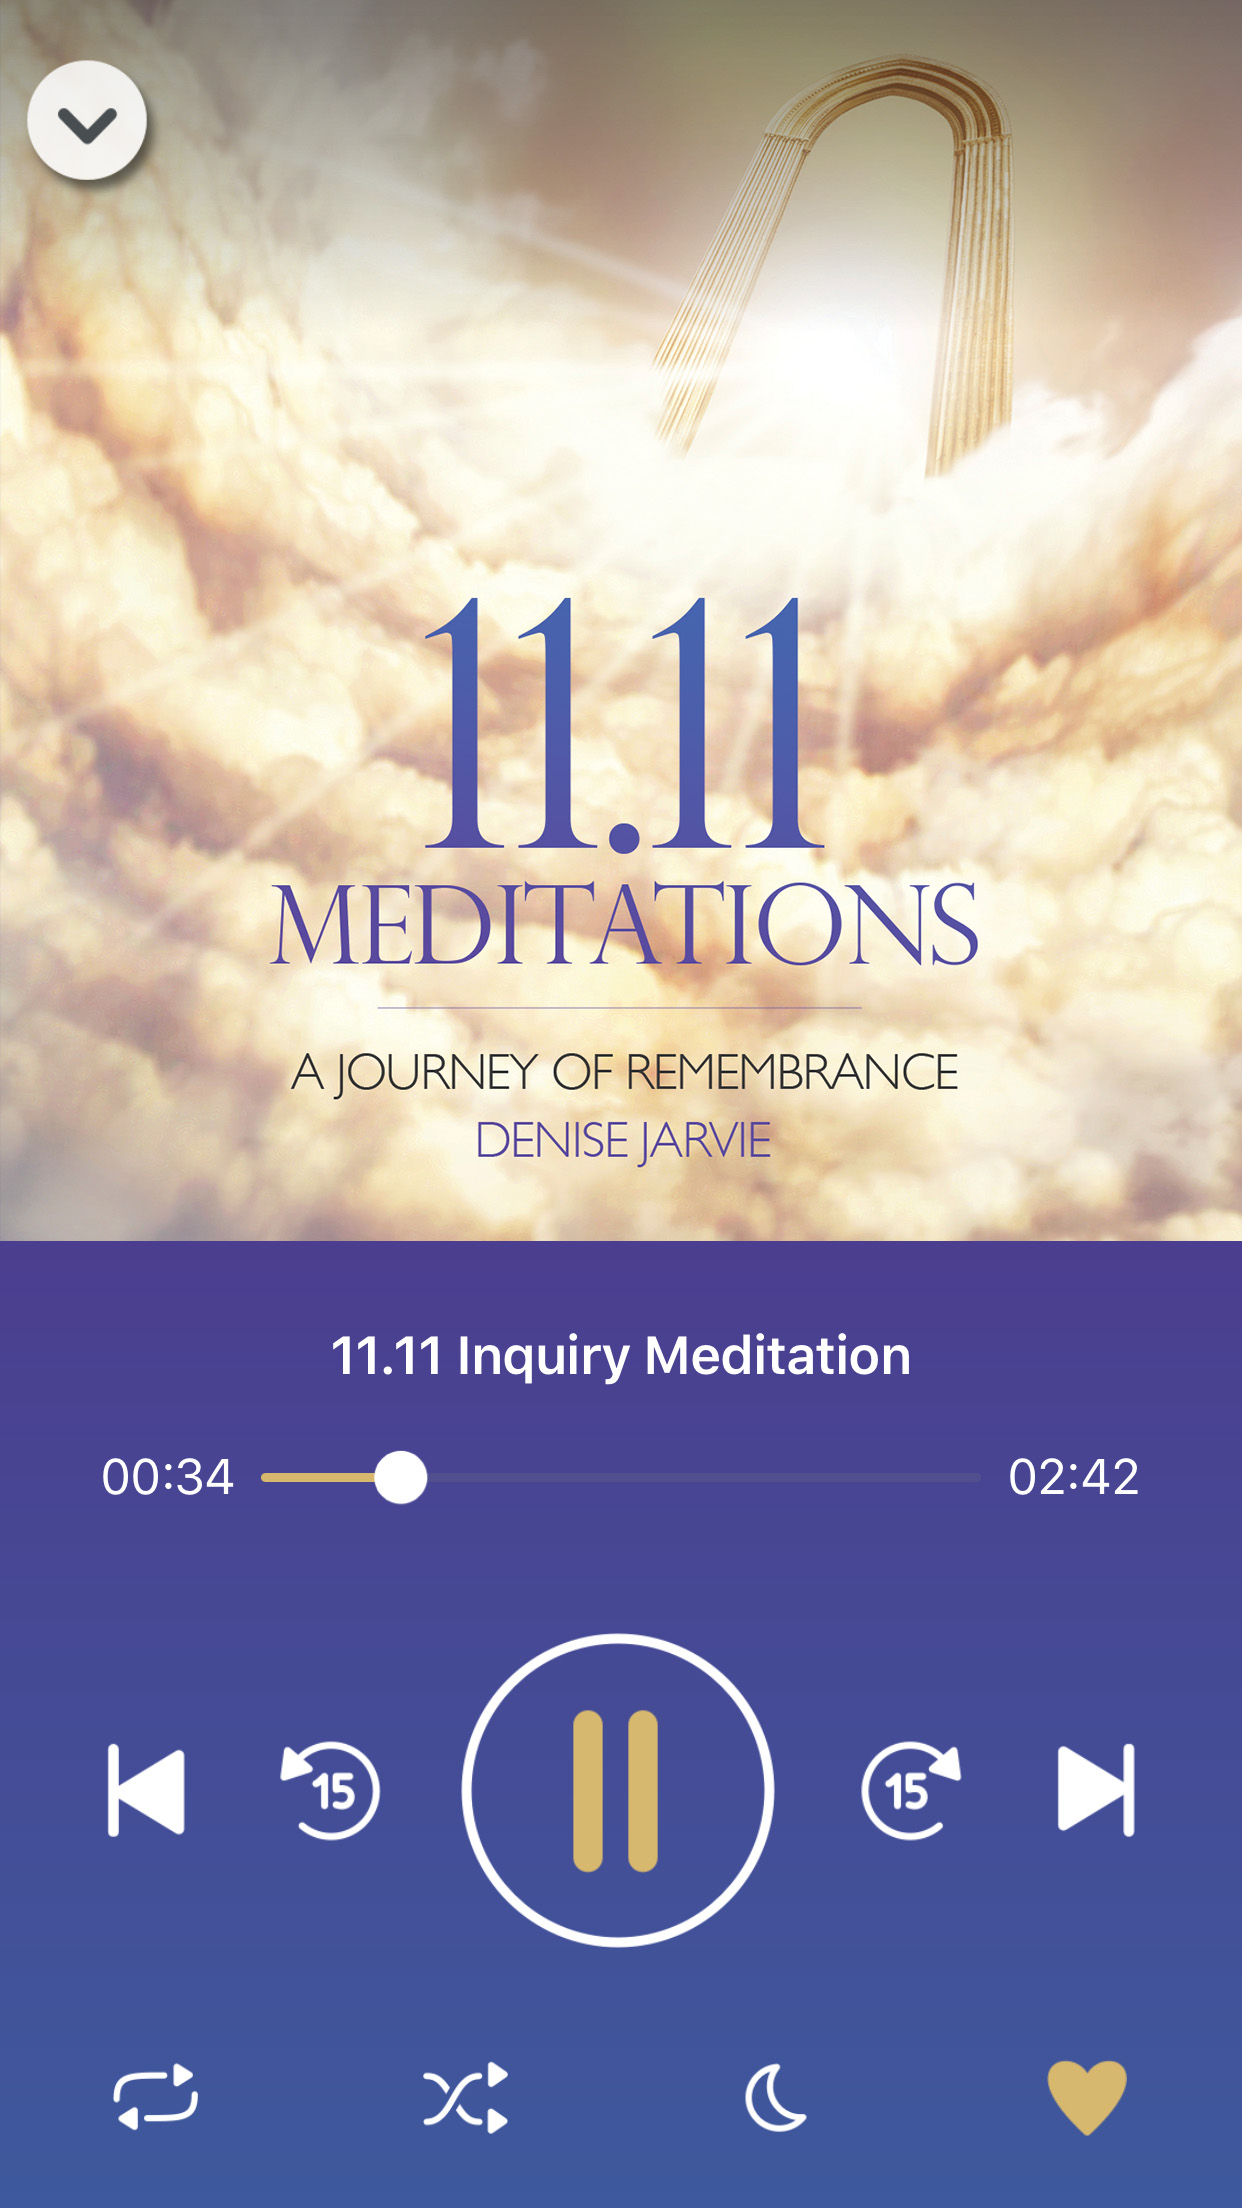 1111 Meditations by Denise Jarvie